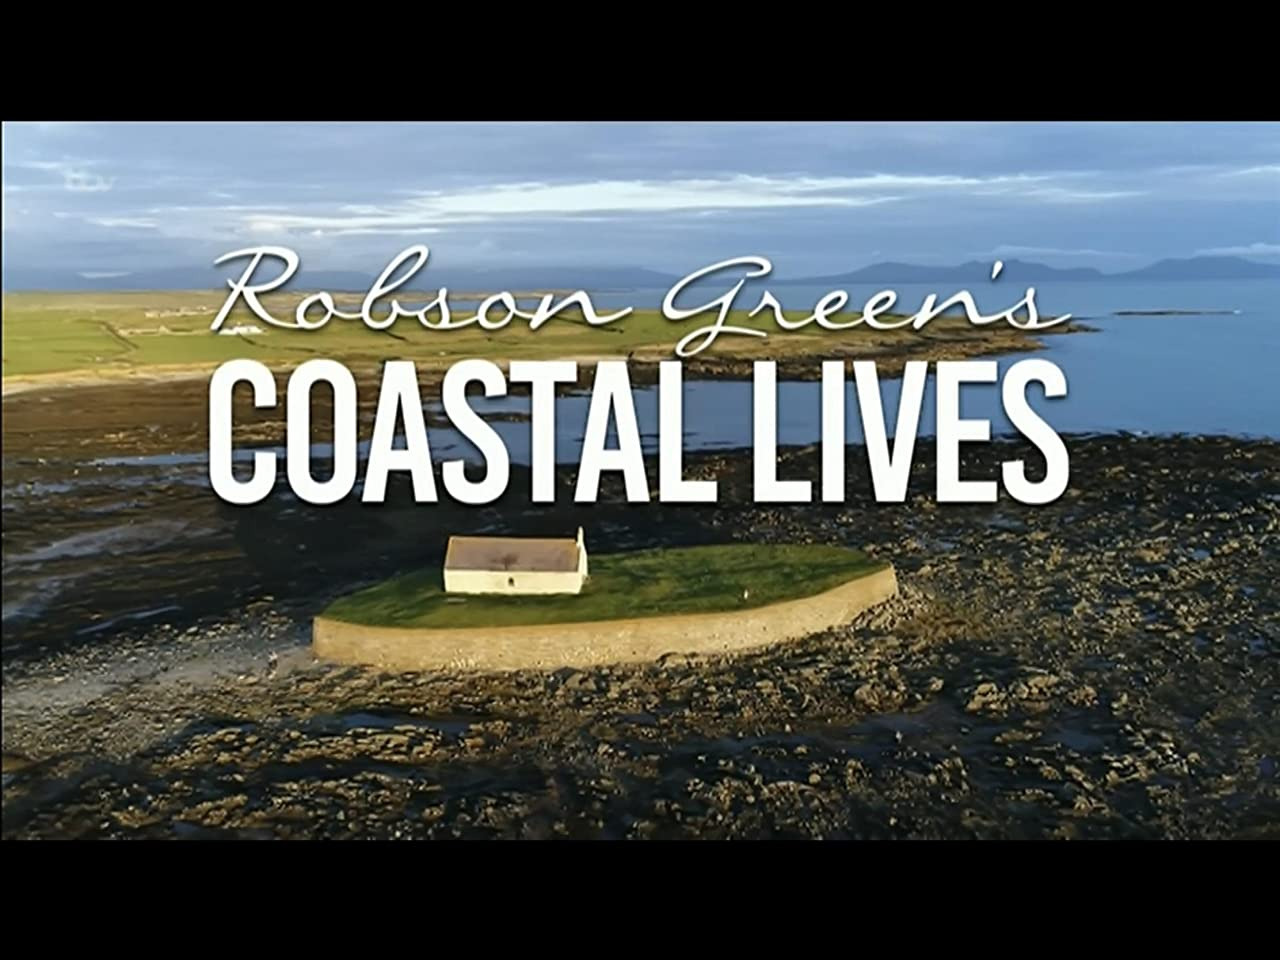 Show Robson Green's Coastal Lives